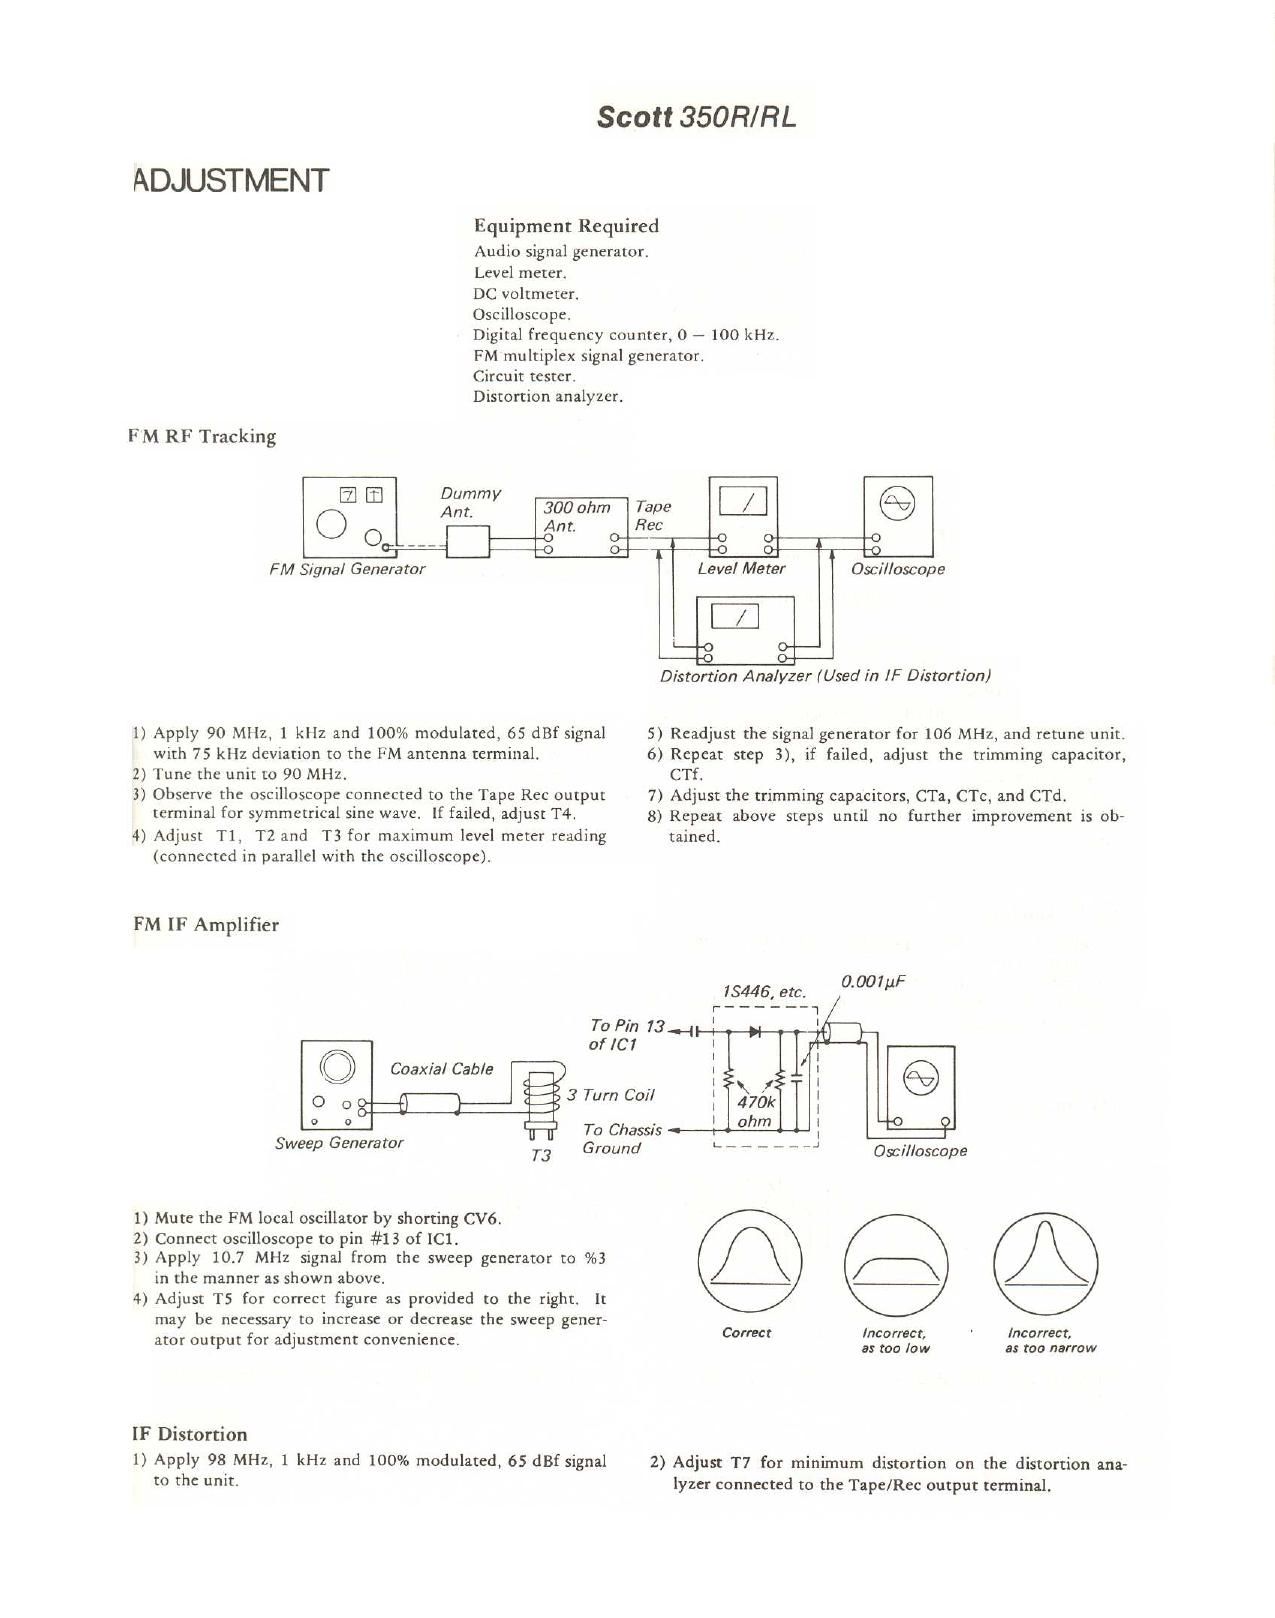 Scott 350 RL Service Manual